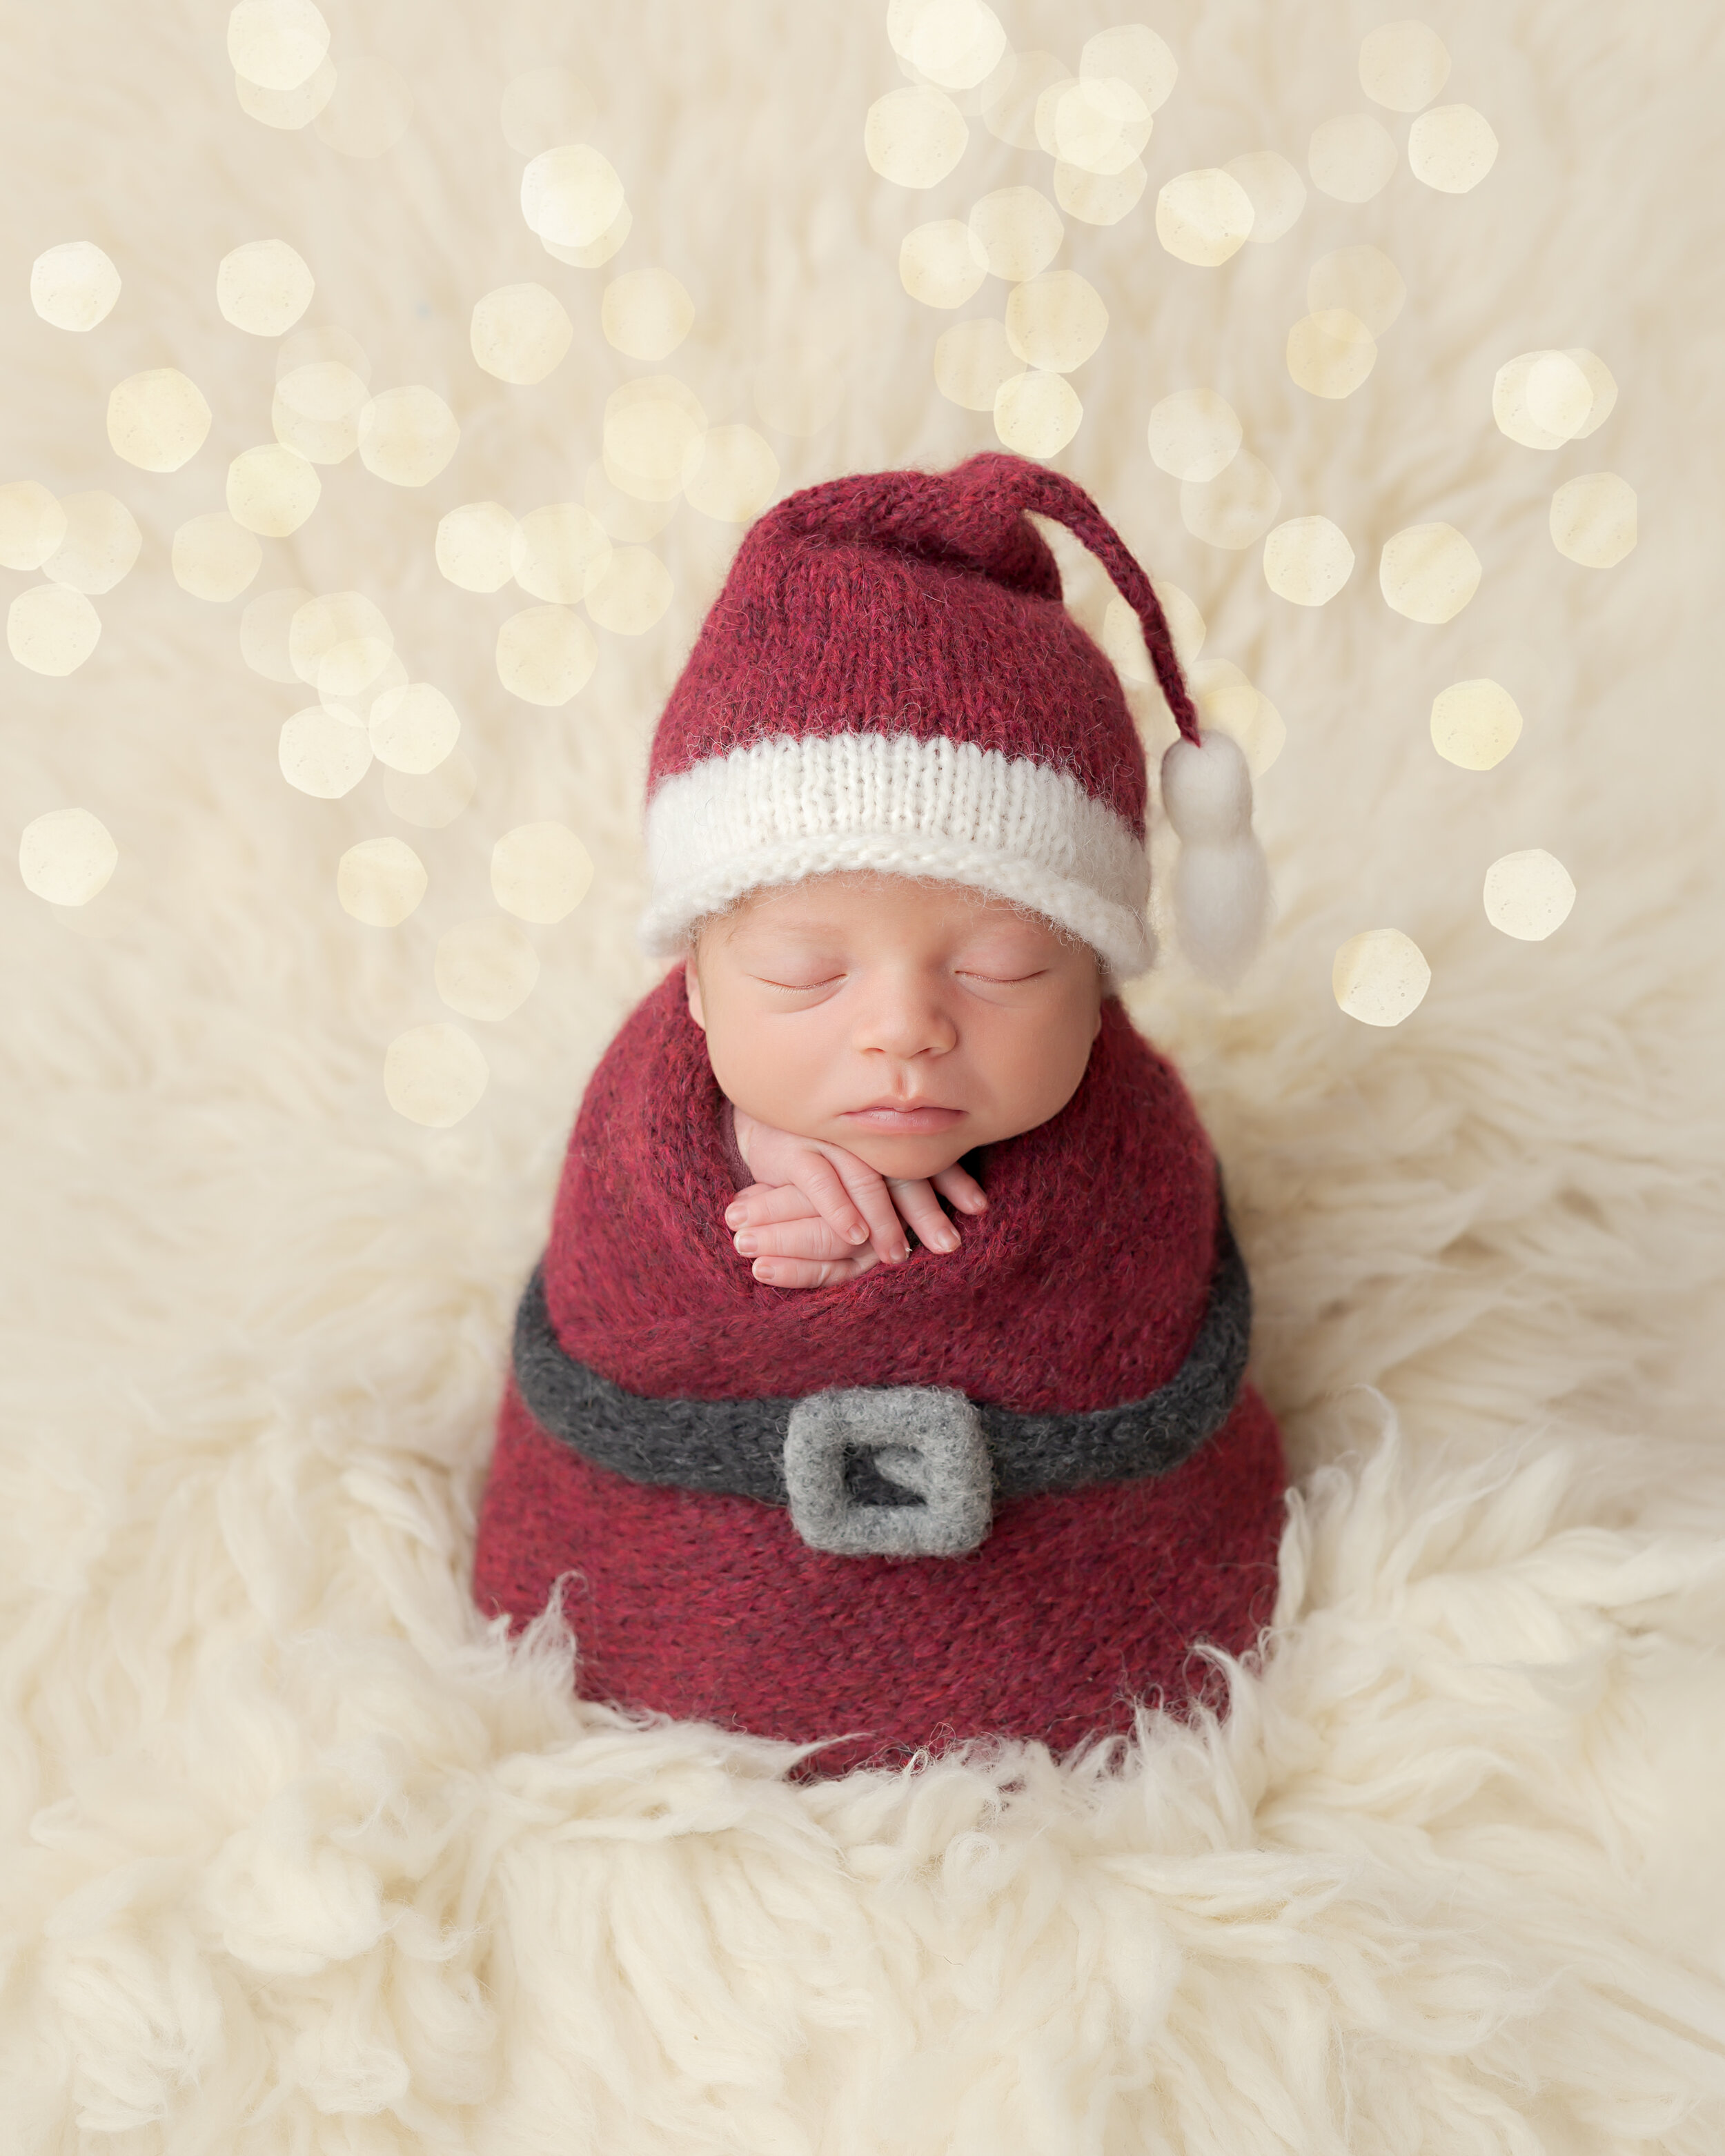 Potato sack and other funny names — Karen Kimmins Newborn Photography |  Newborn, baby and maternity photographer